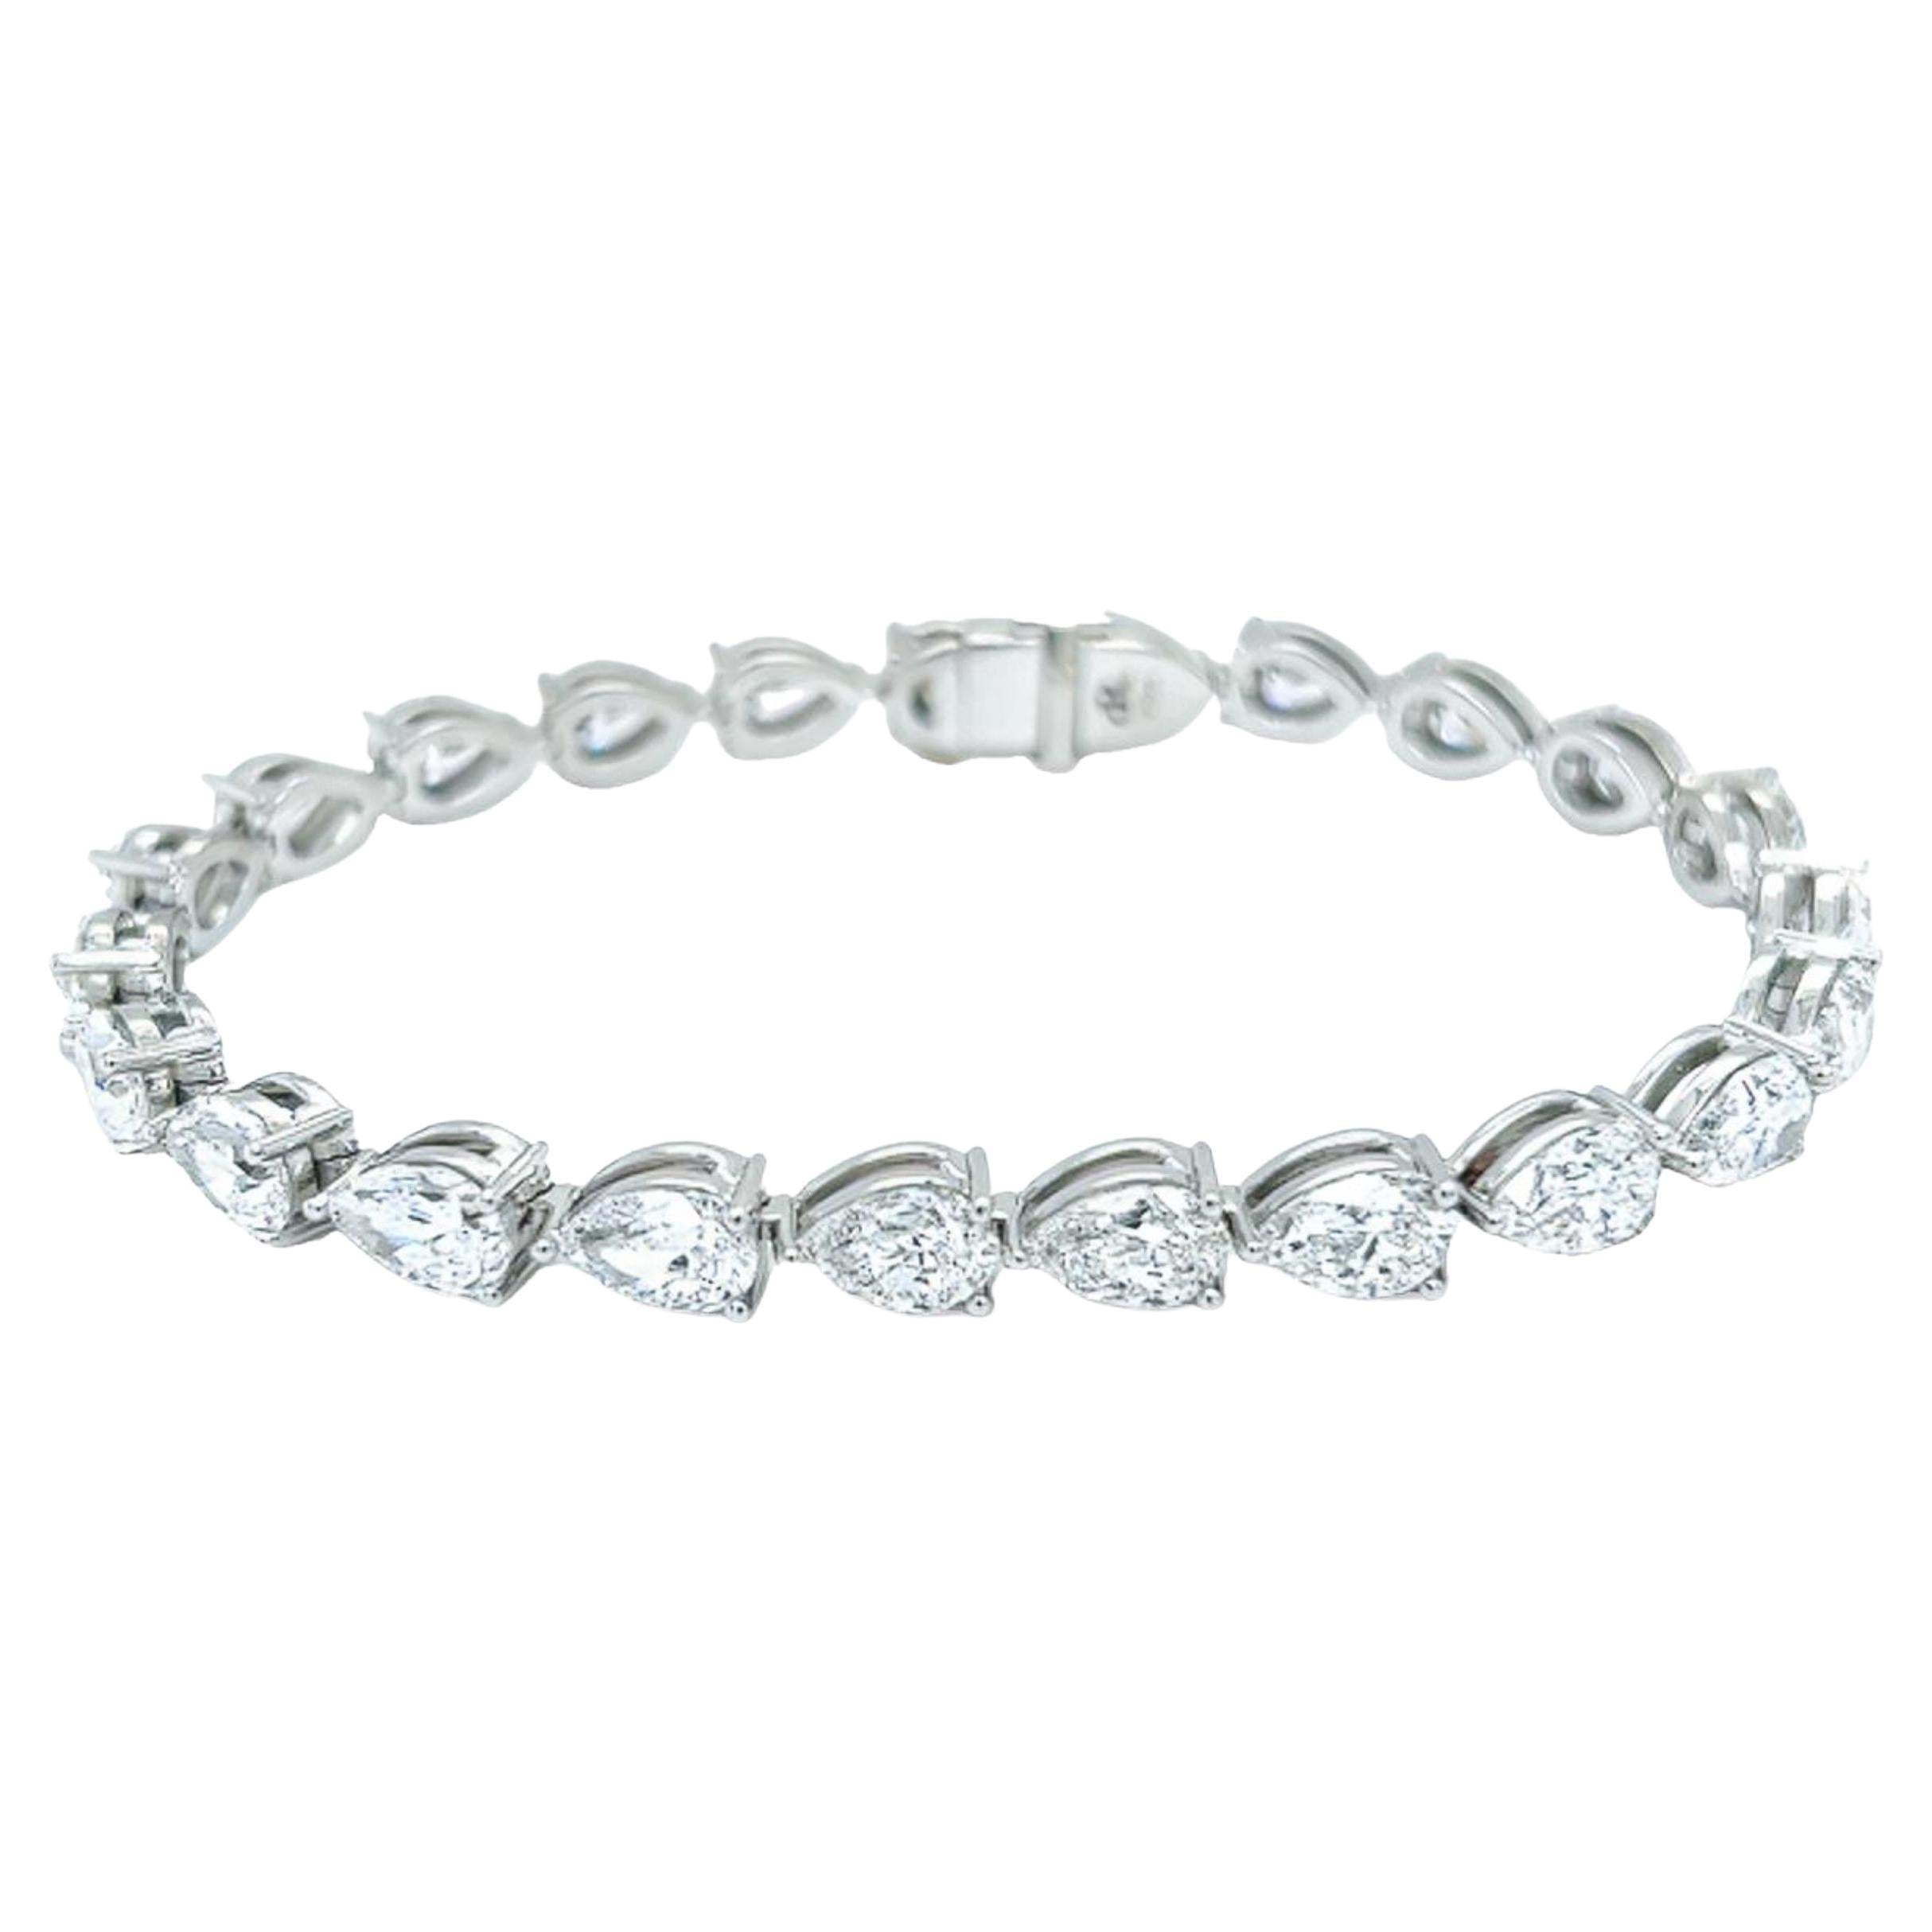 David Rosenberg 16.13 Carat TW White Pear Shape GIA Diamond Tennis Bracelet For Sale